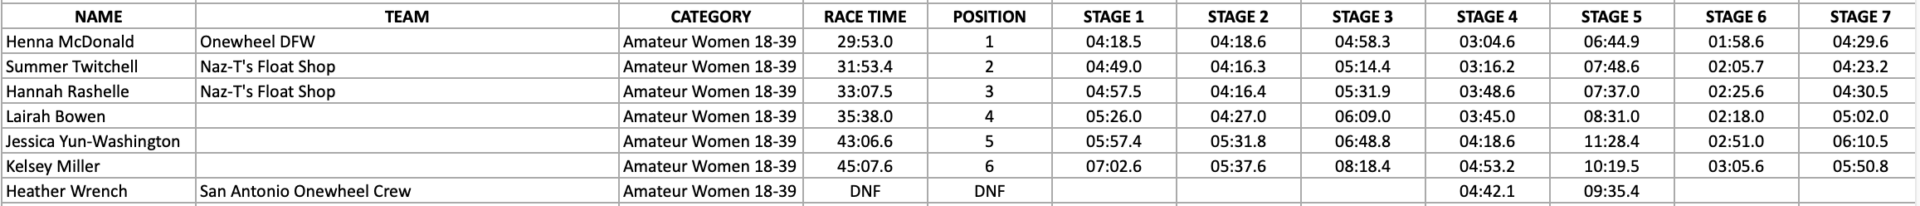 Enduro Race Results for Amateur Women 18-39